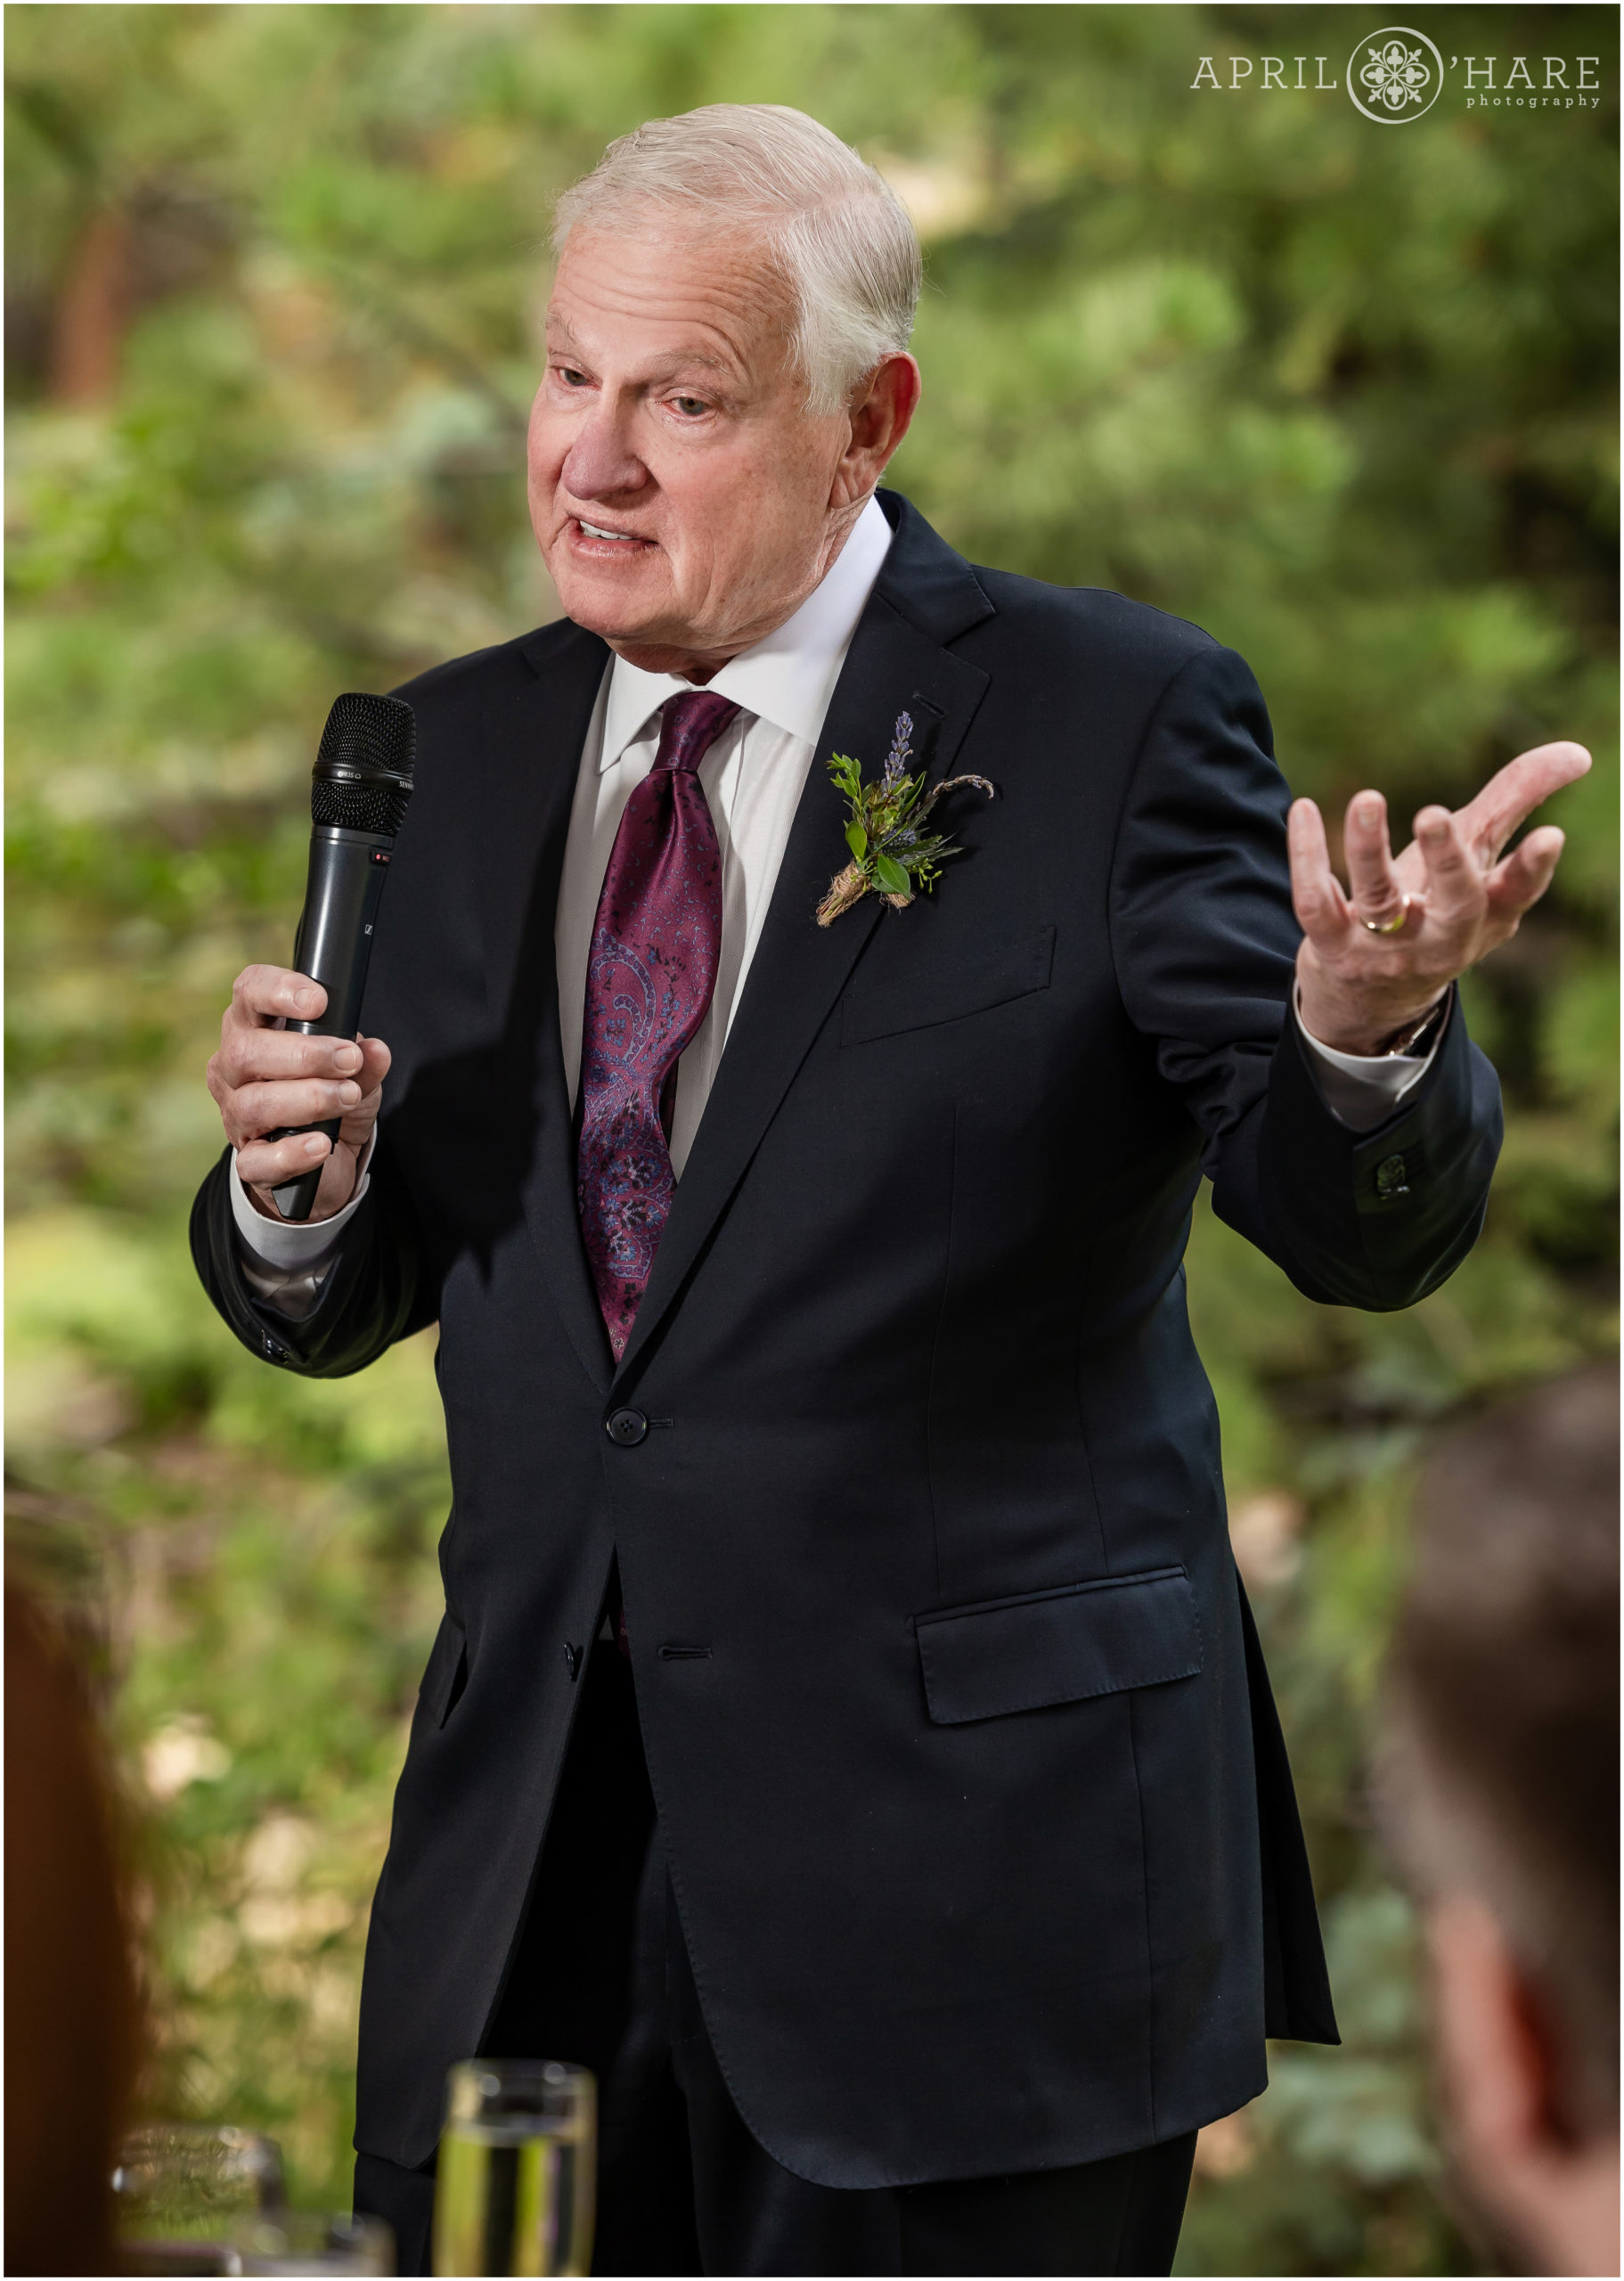 Father of the Bride makes a speech on his daughter's wedding day at Estes Park Condos